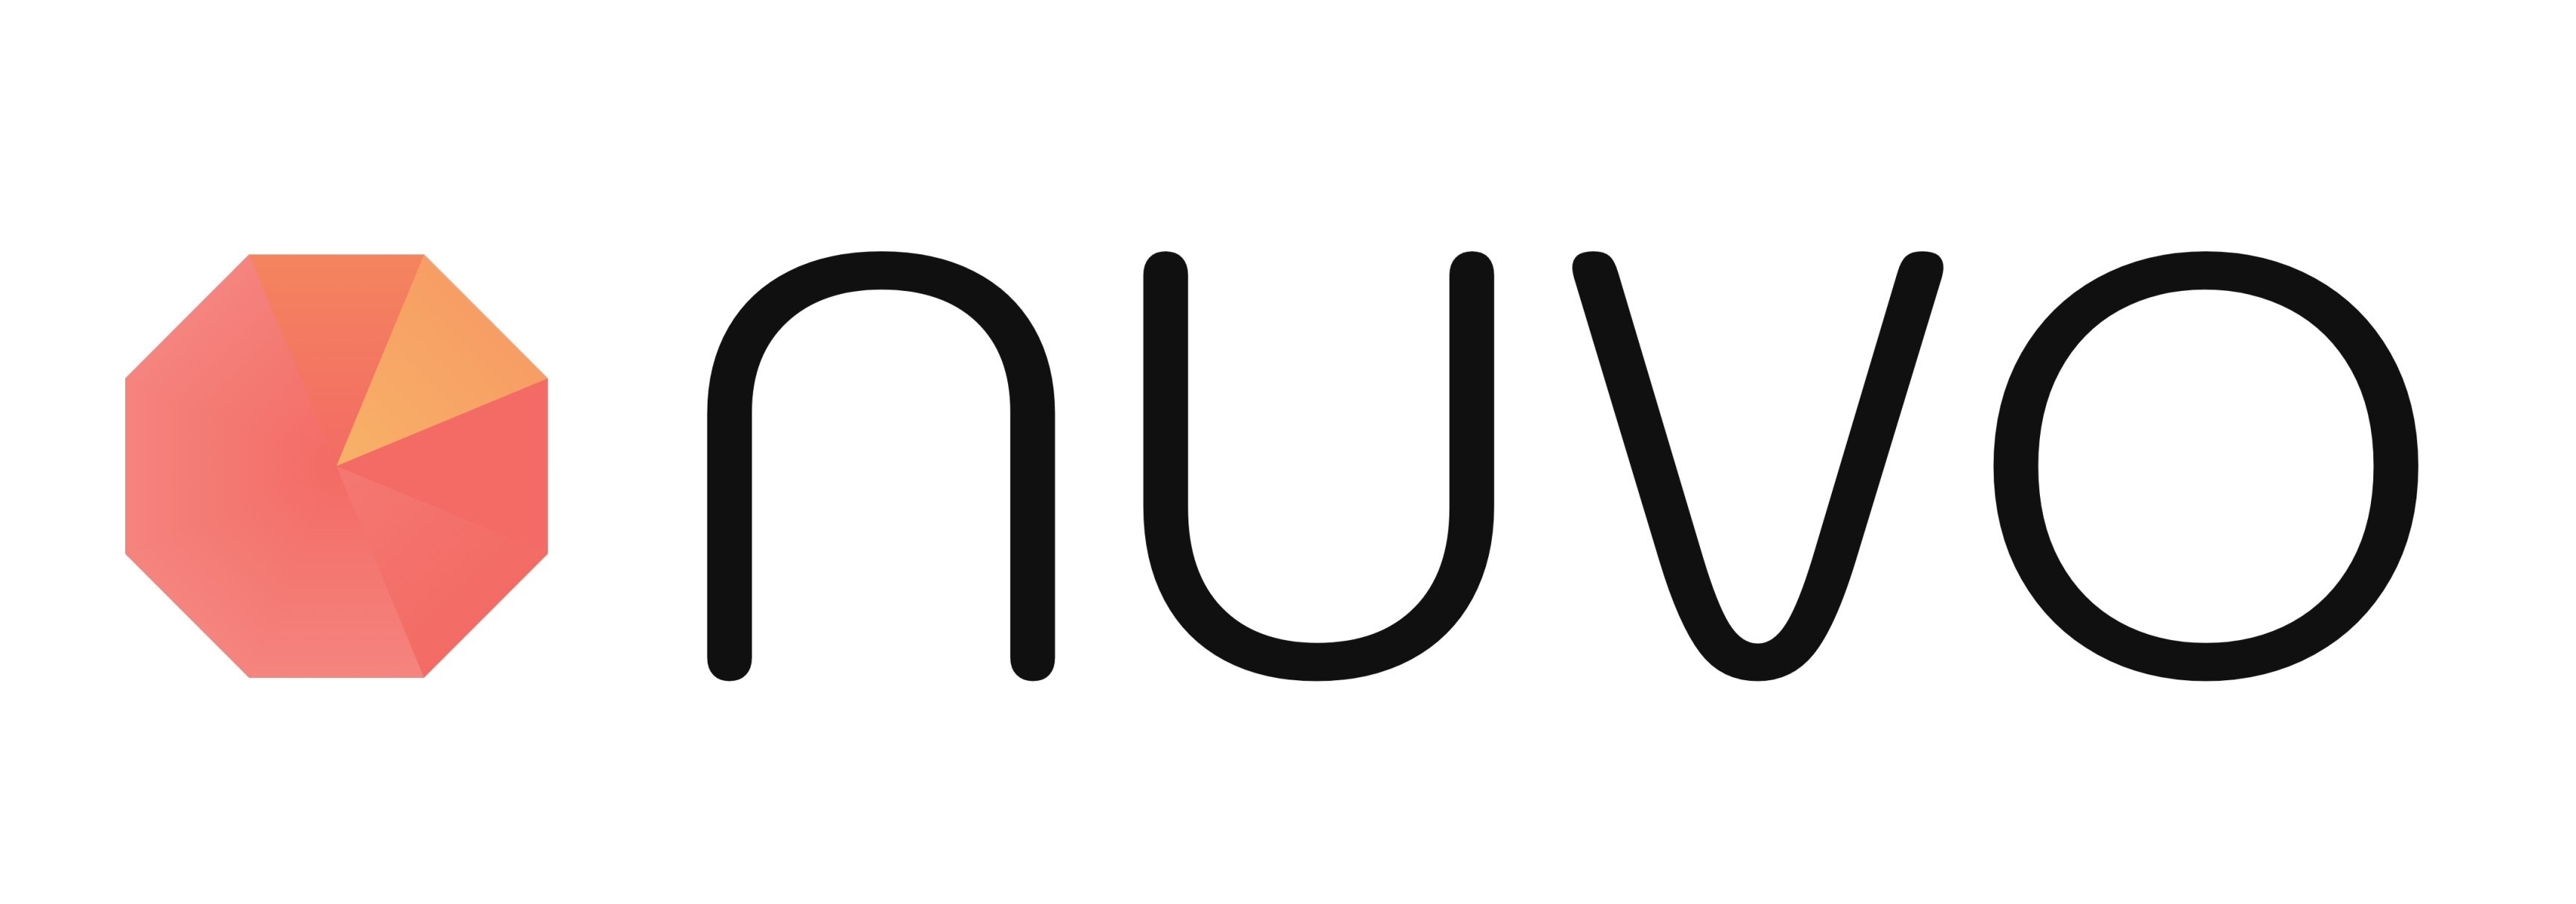 NUVO by Bancor株式会社